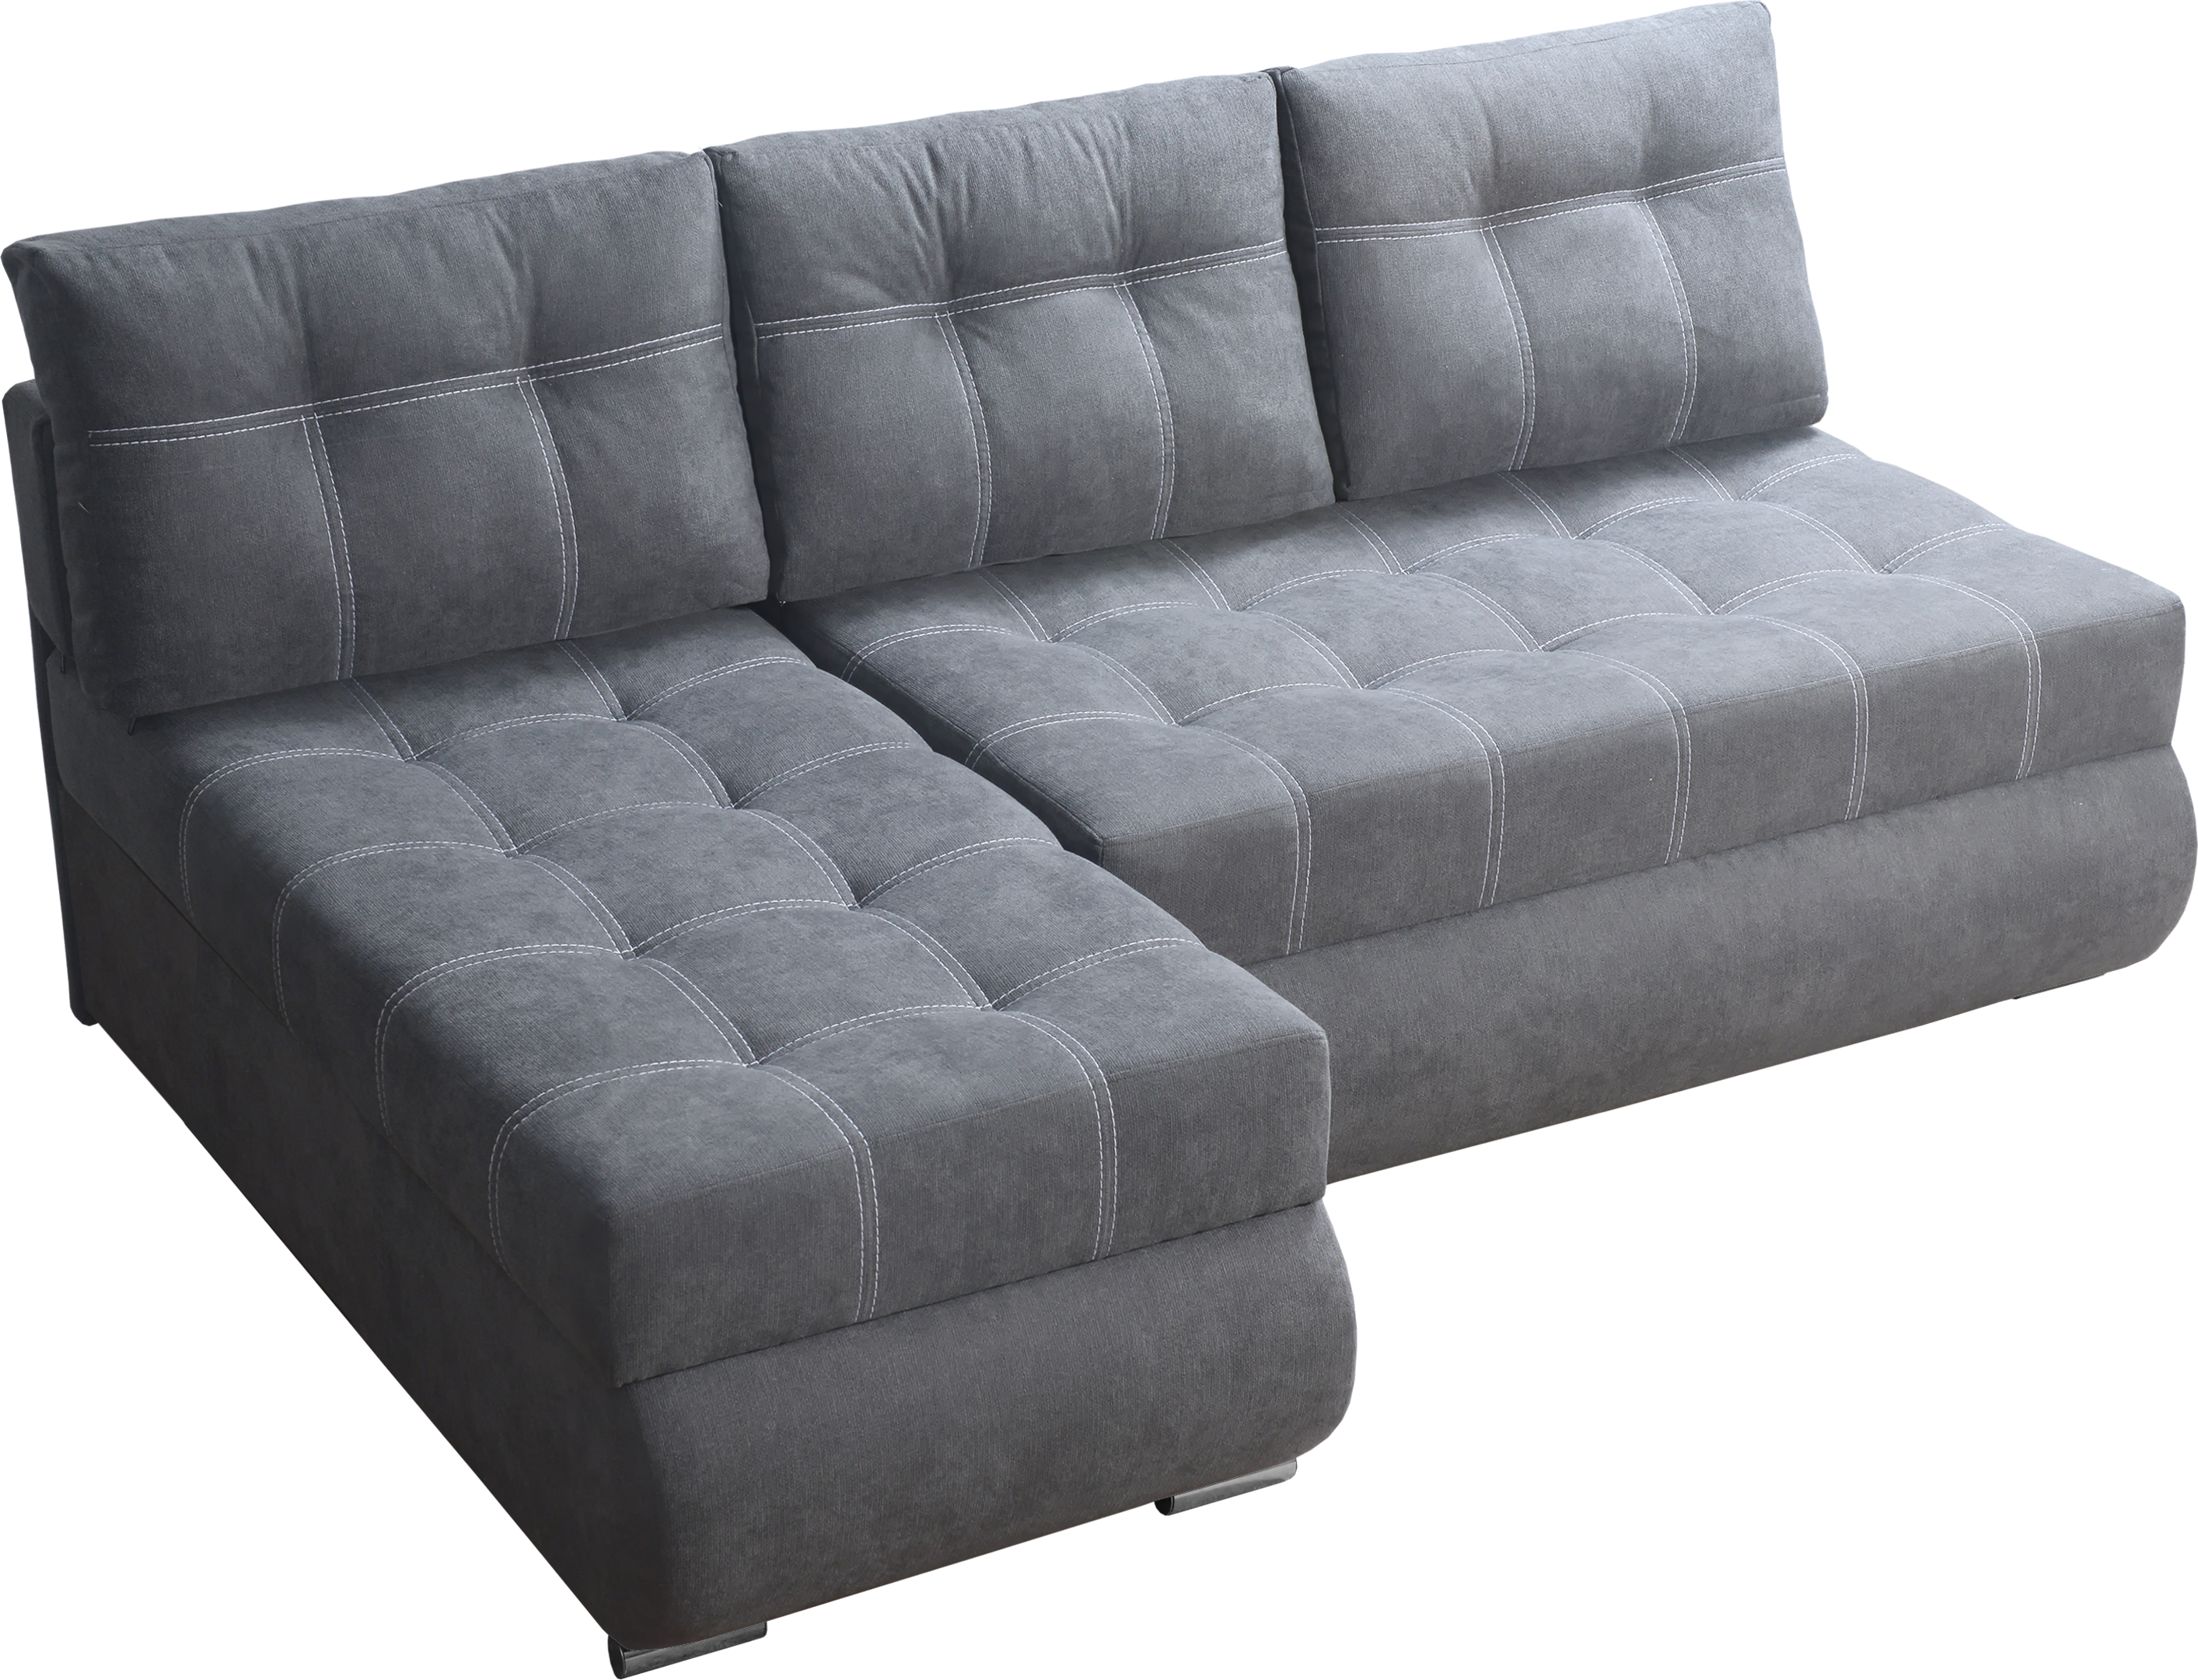 Narożnik Alan Mini Meble Ribes, Sigma Rc 80626 Home Cinema Sofa Bed With Console Table